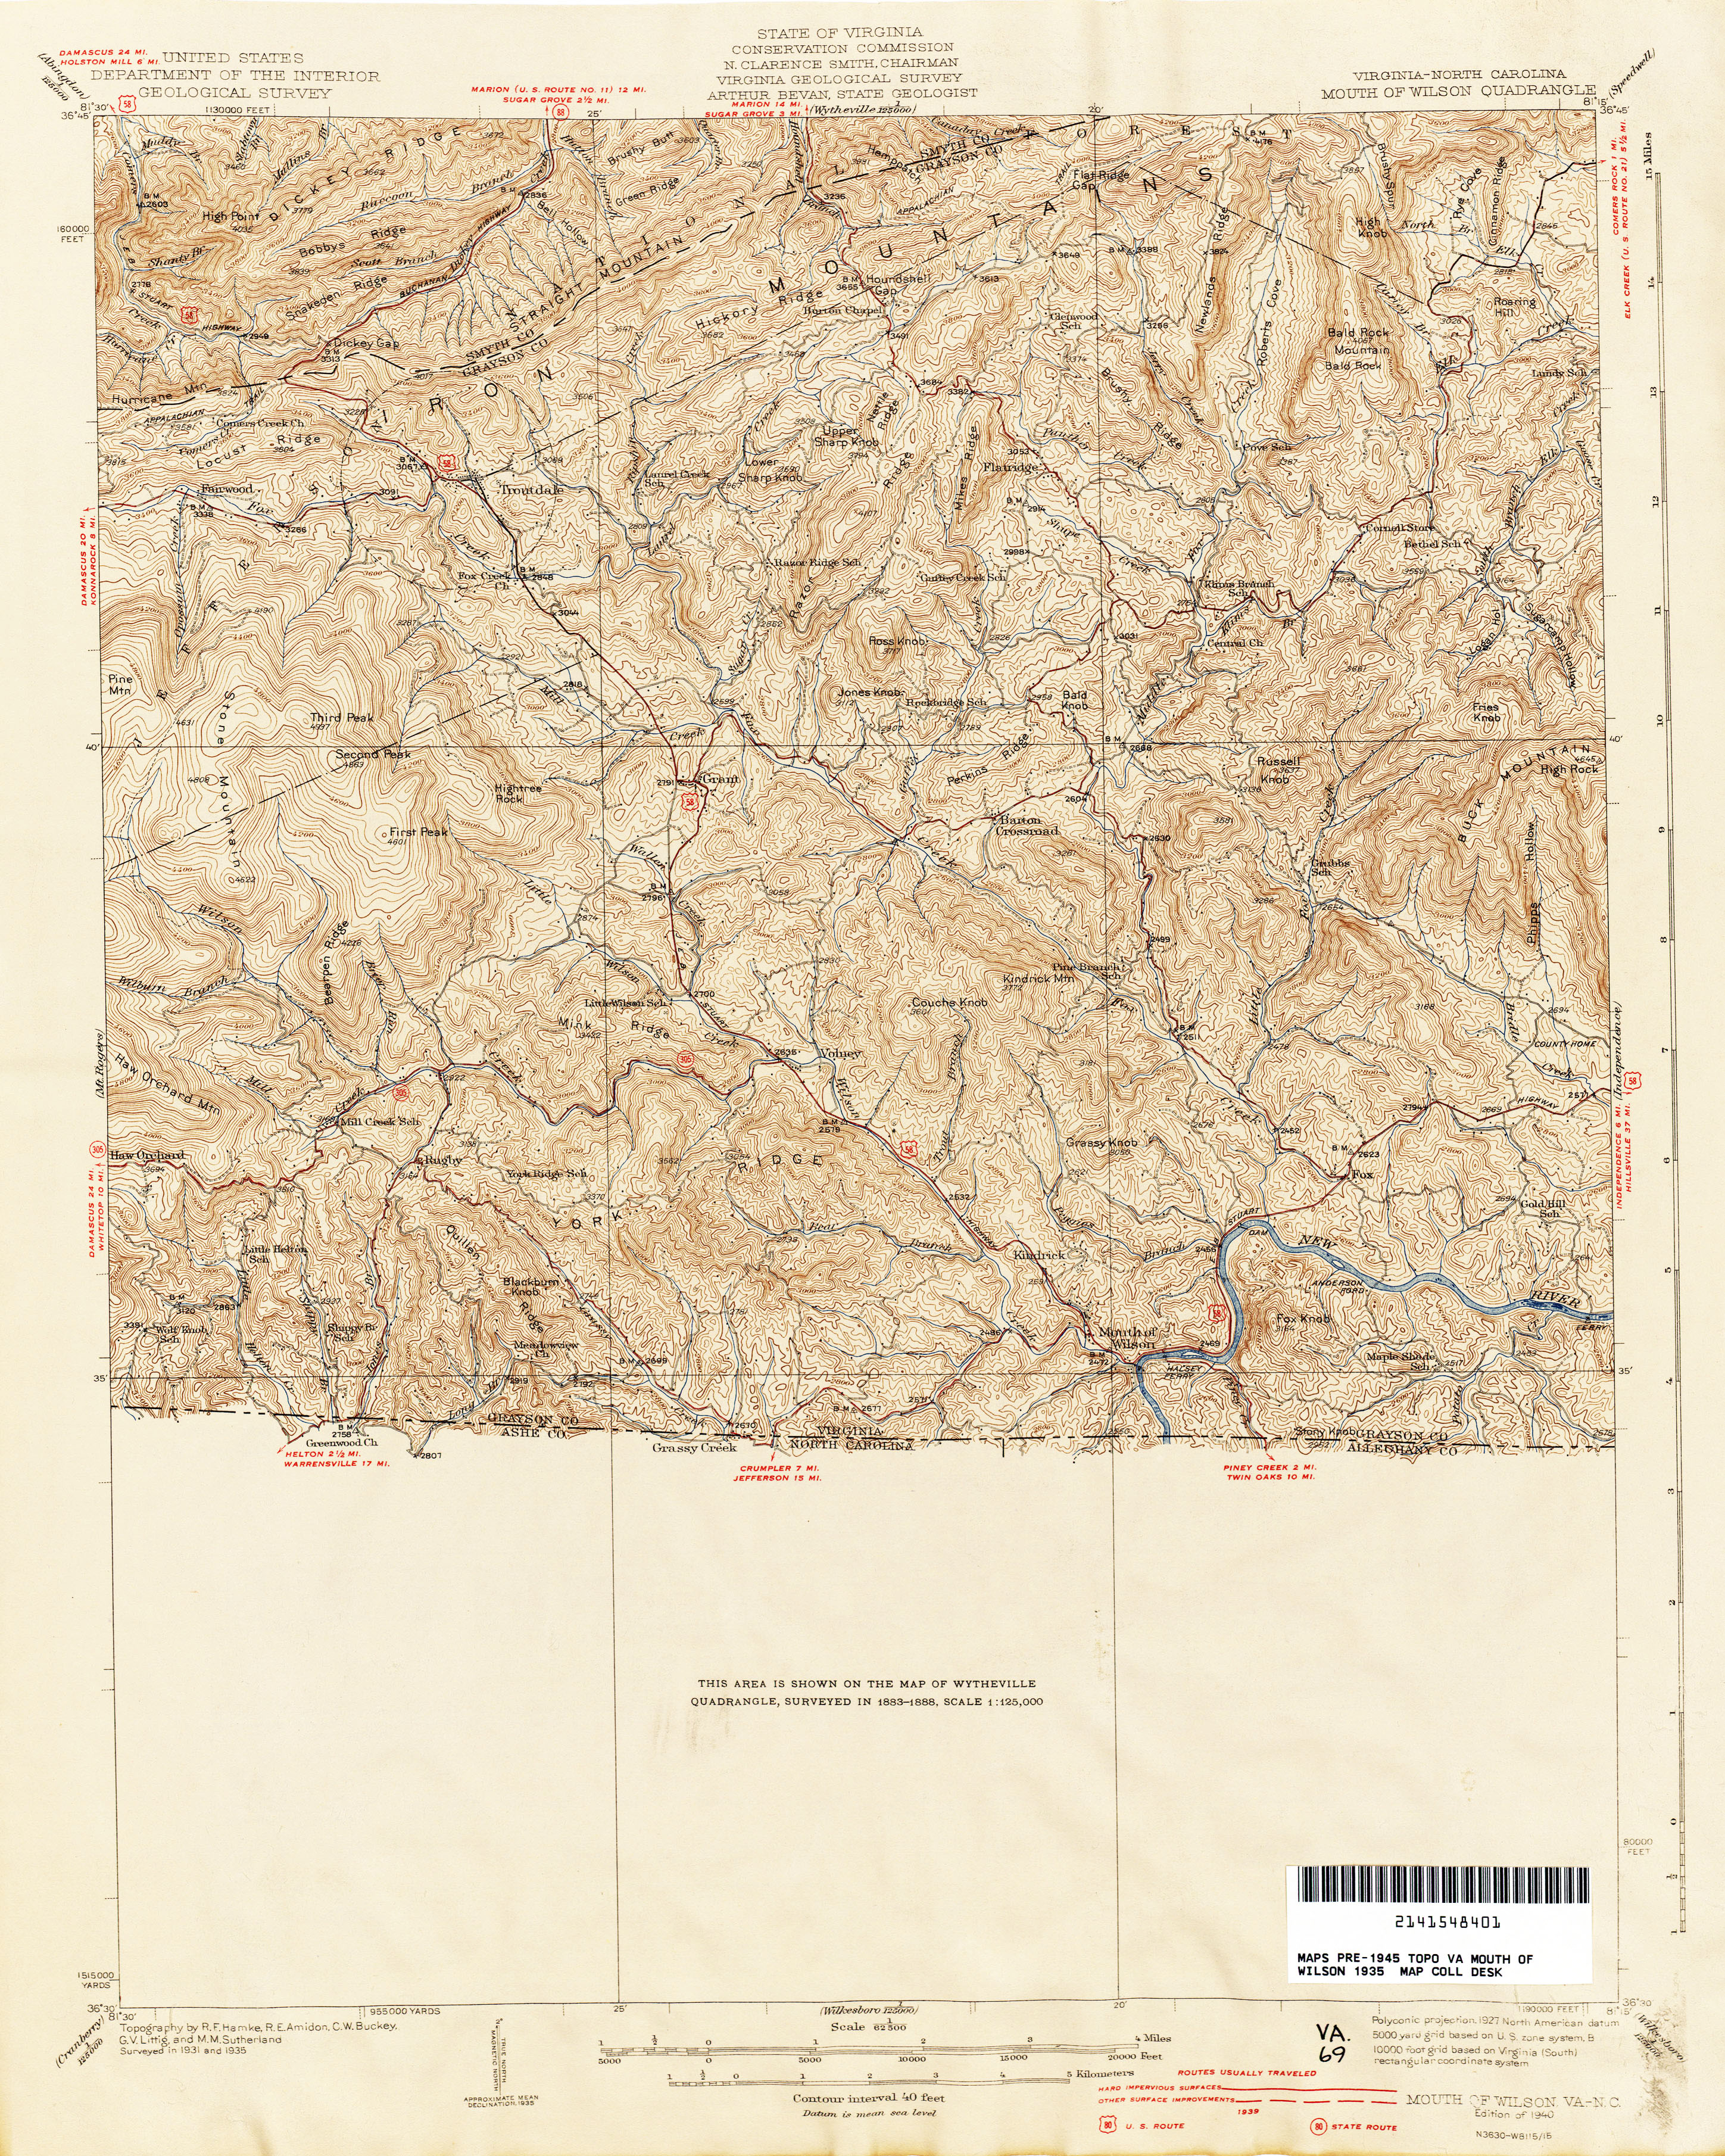 USGS 1904-23x28 Nantahala North Carolina Tennessee Quad 